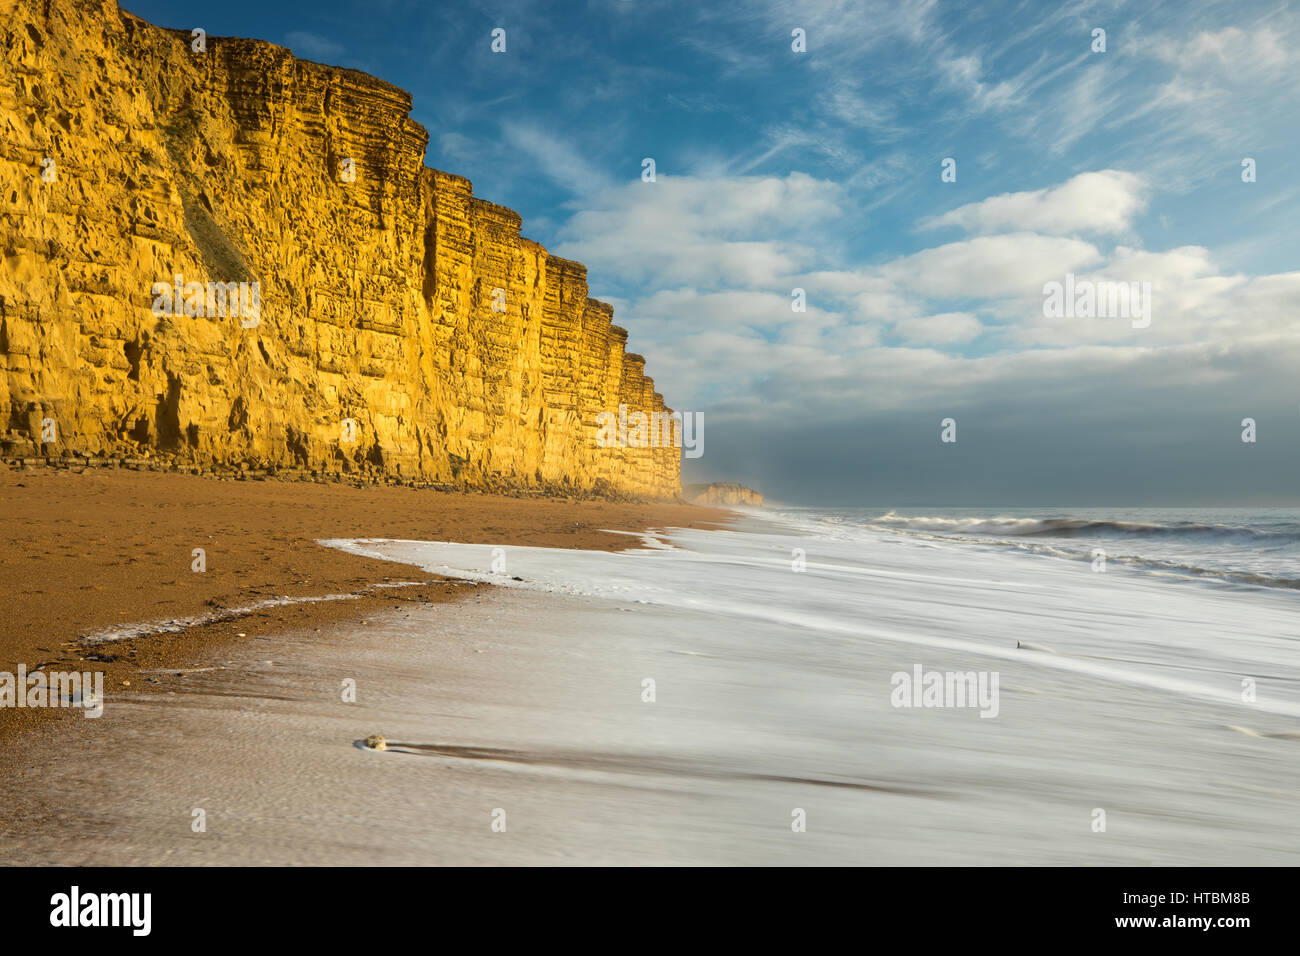 waves breaking on the beach beneath East Cliff, West Bay, Jurassic Coast, Dorset, England, UK Stock Photo